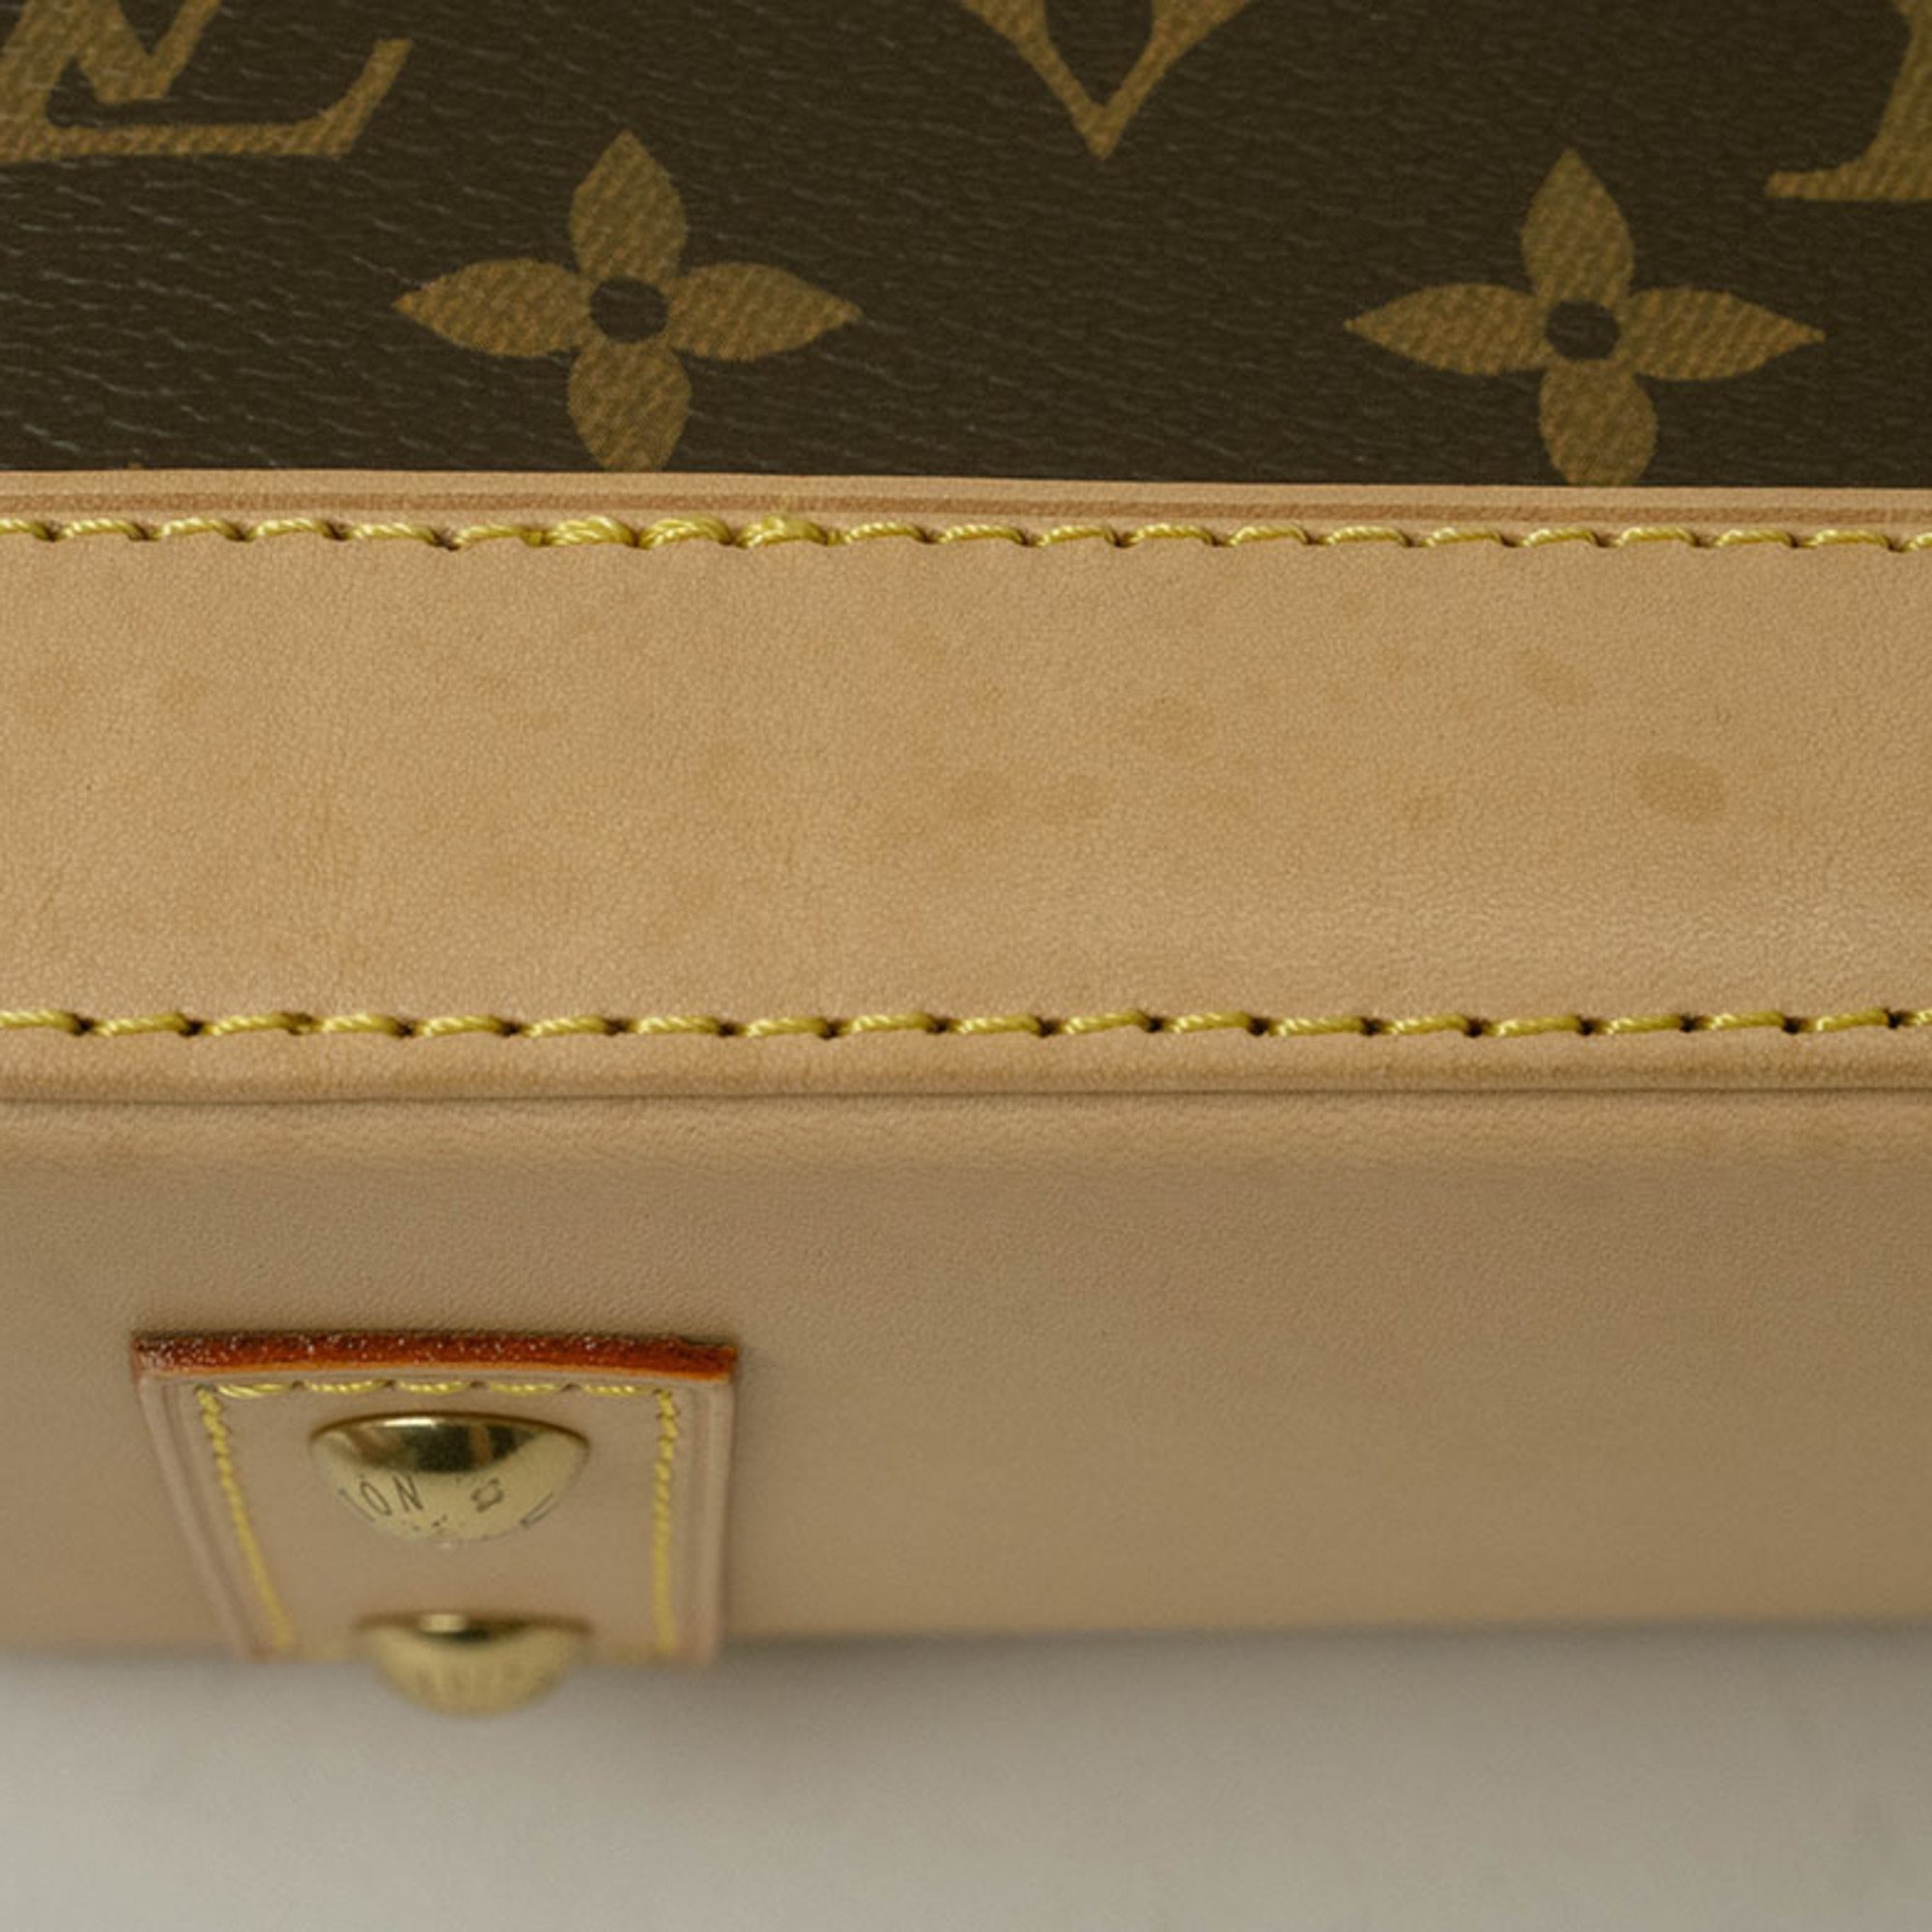 Louis Vuitton Alma BB Handbag Monogram M53152 Women's LOUIS VUITTON